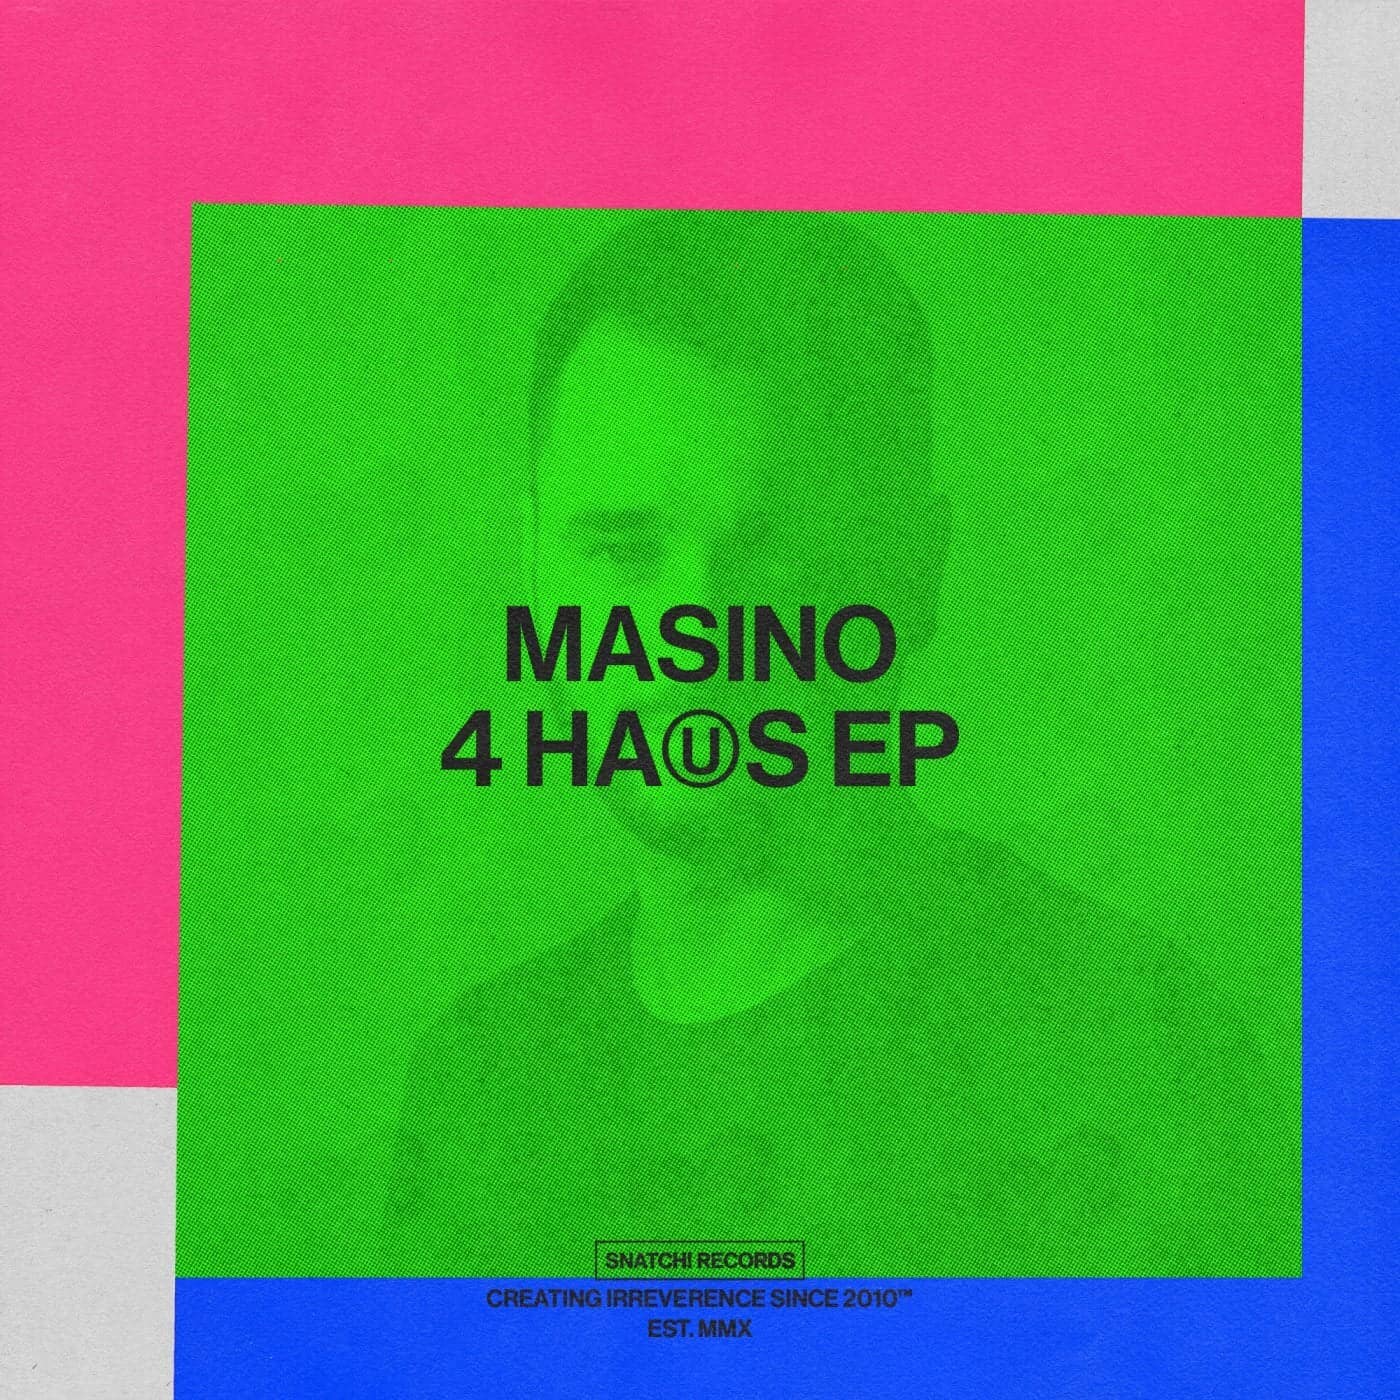 Download Masino - 4 Haus EP on Electrobuzz